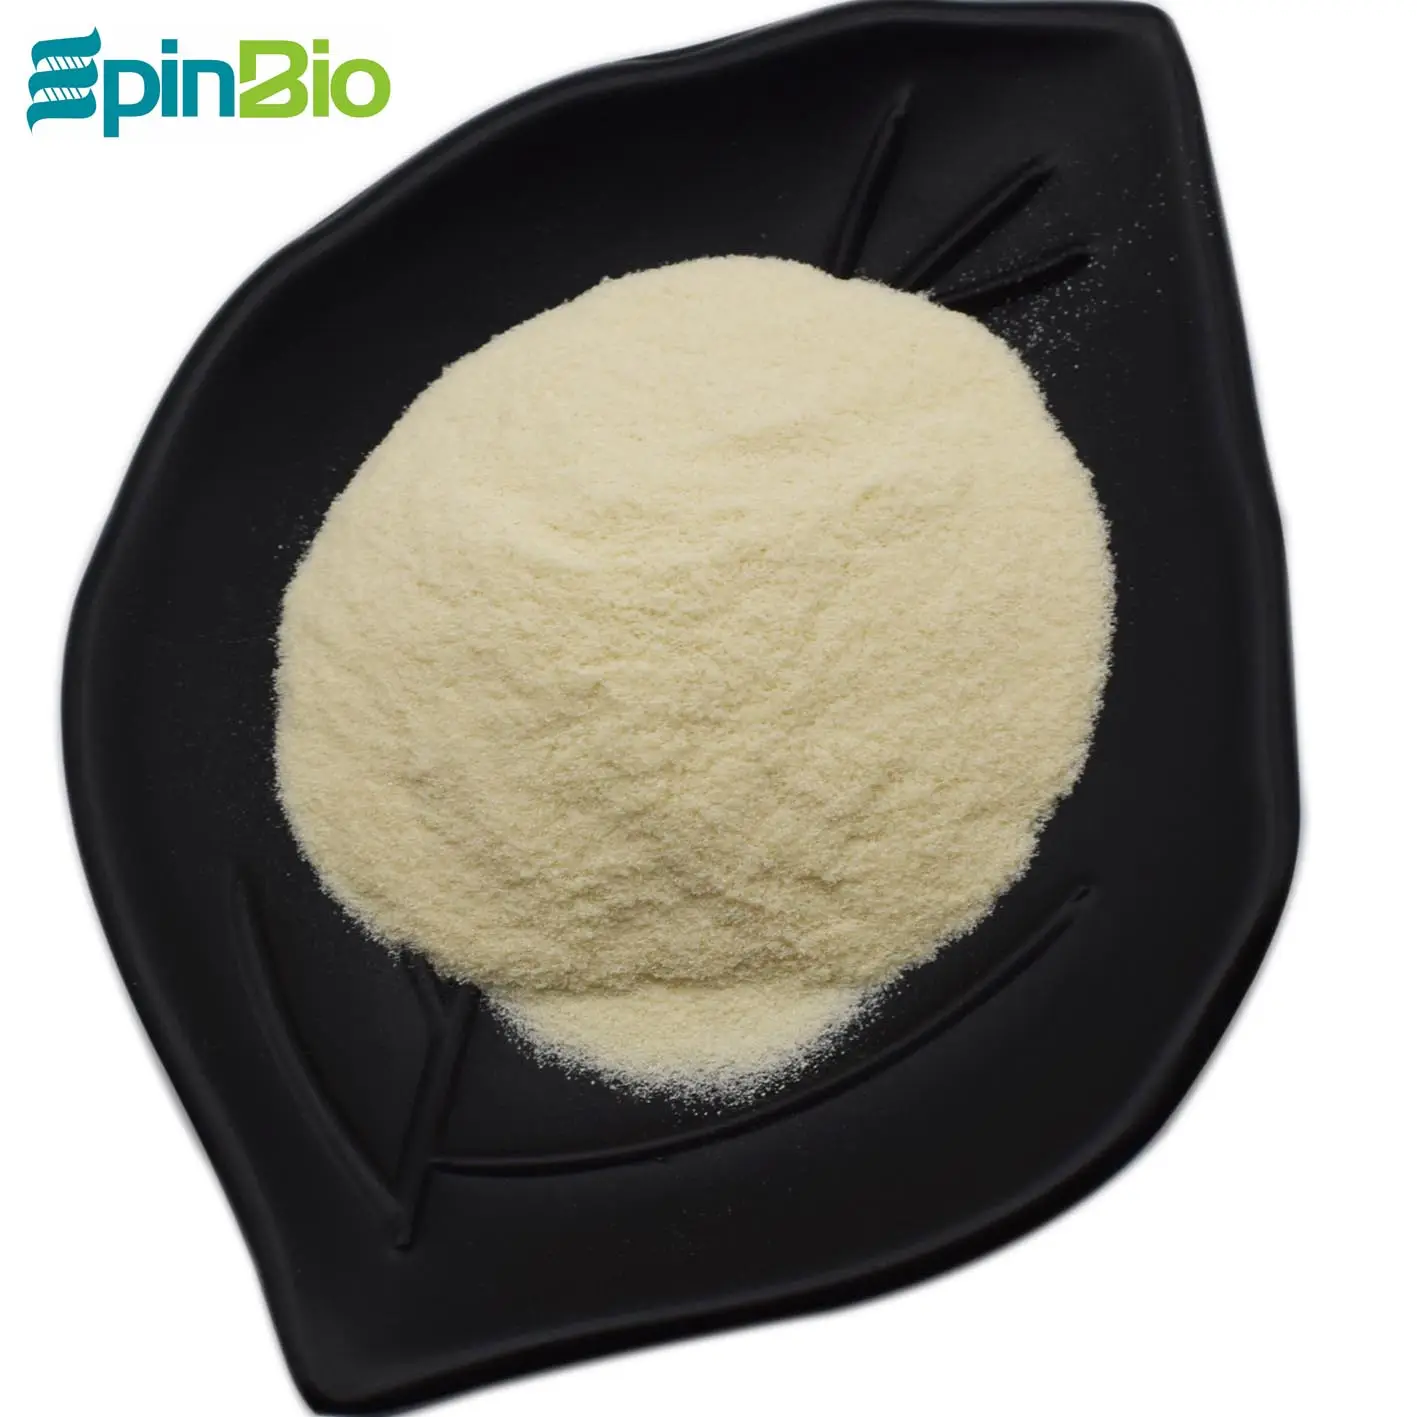 Epinbioは高品質の水溶性80% カルボキシメチルキトサン粉末を提供します